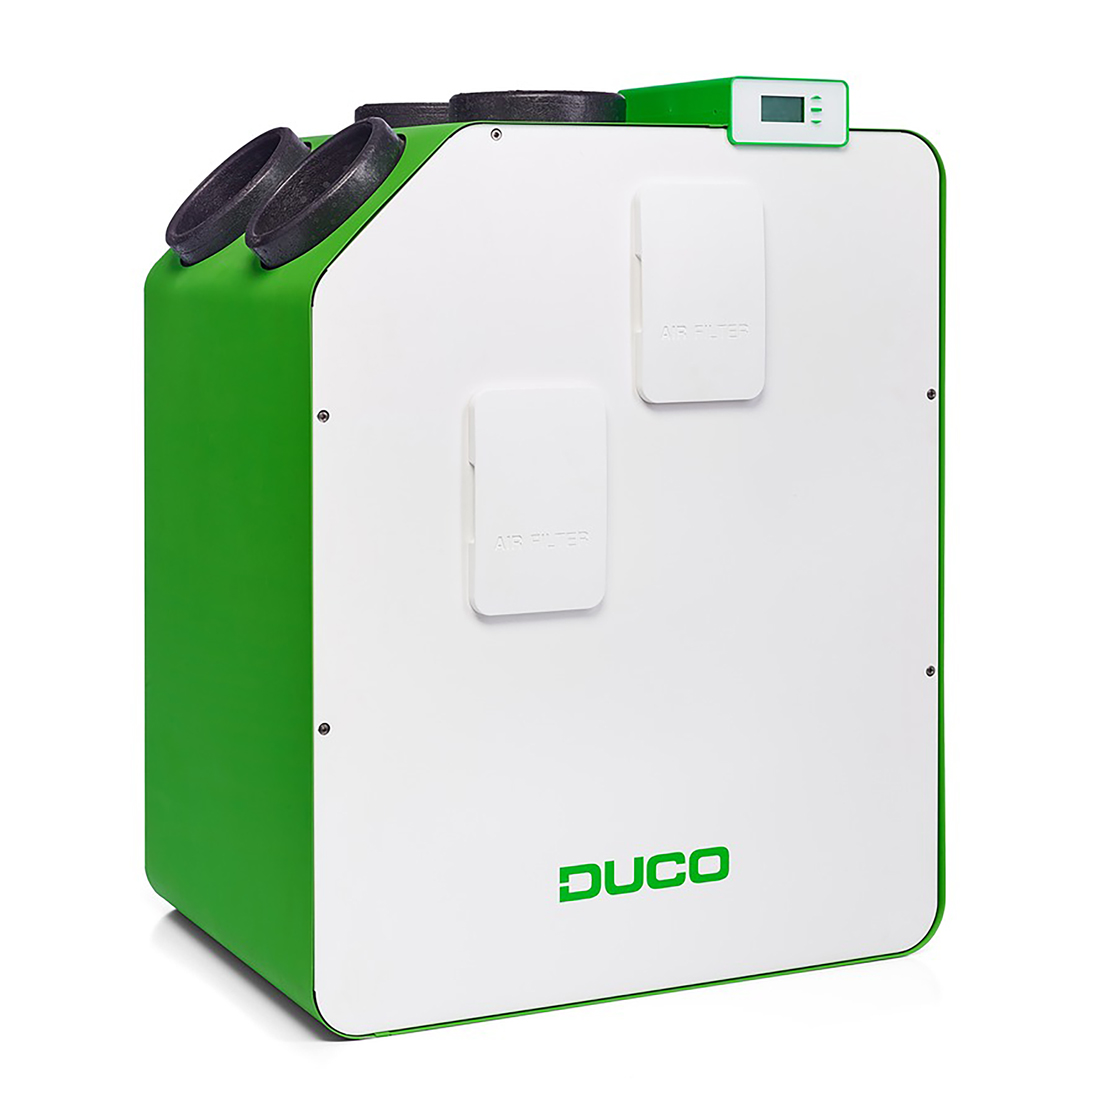 duco-box-energy-400-sideview-bpc-ventilation